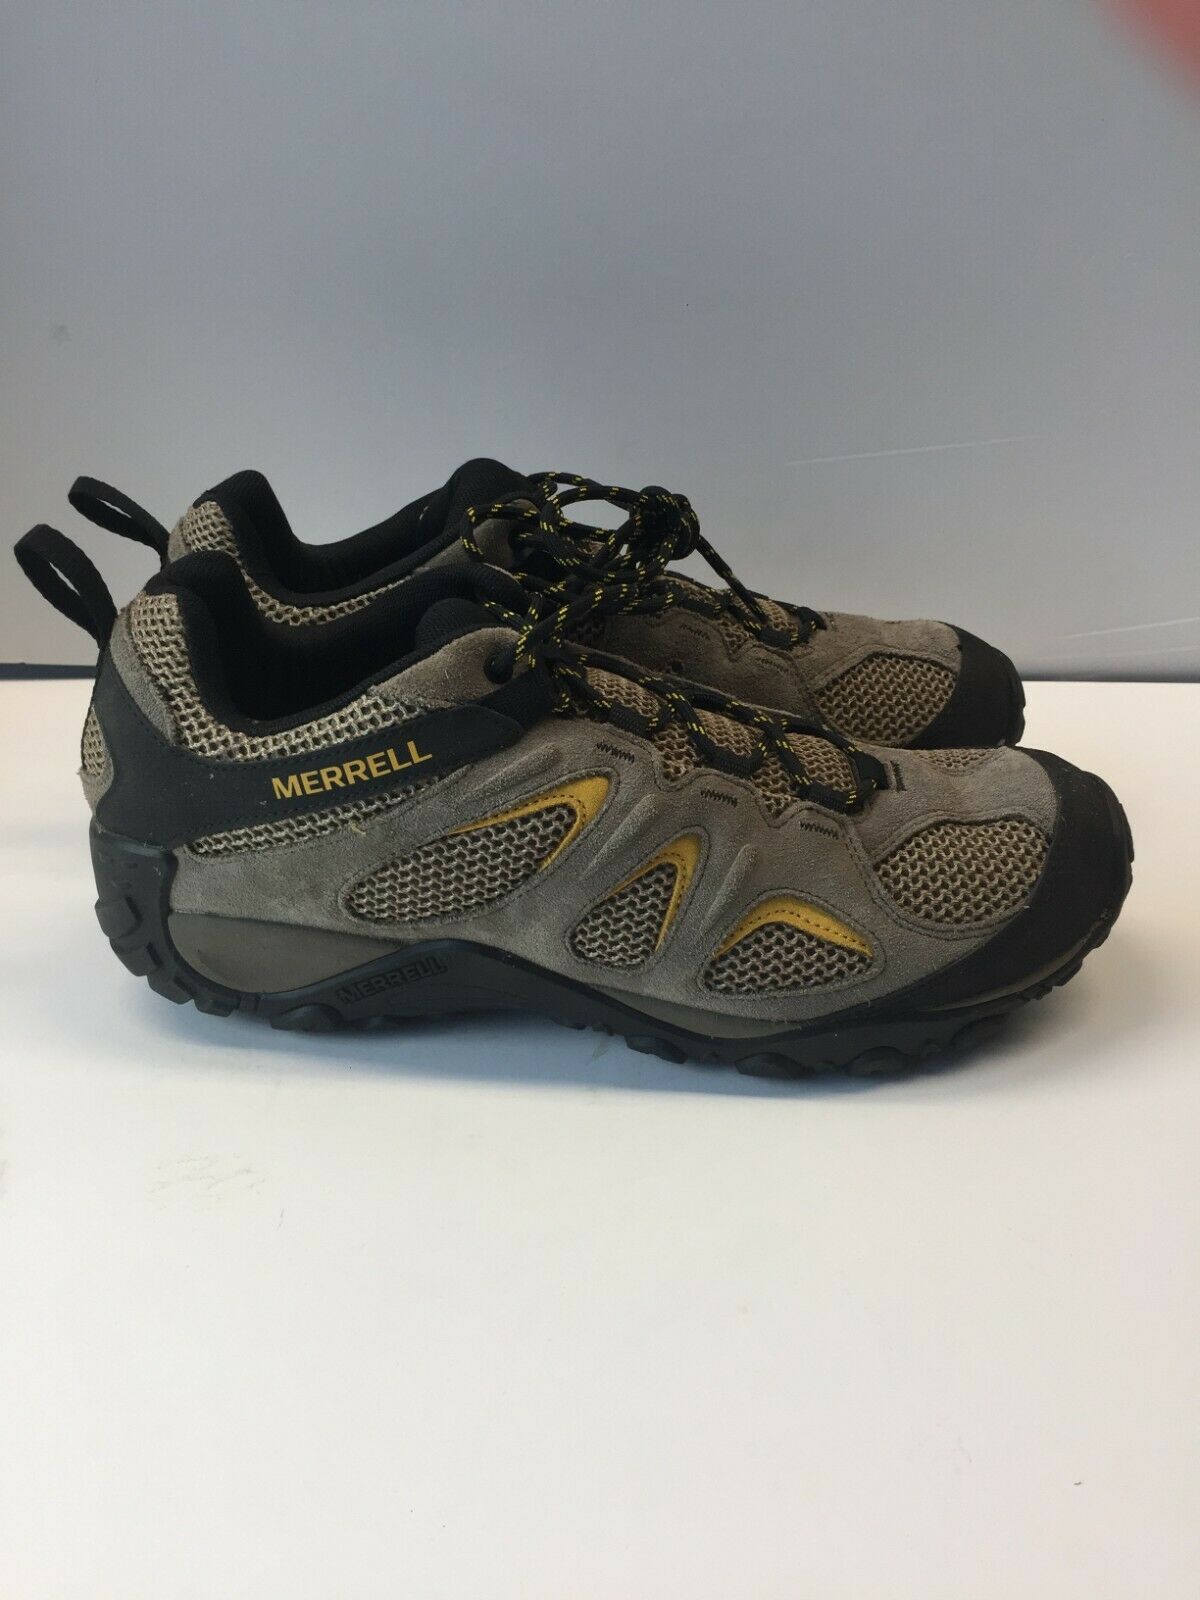 Merrell Yokota 2 Men's Taupe/Black Air Cushion Trail Hiking Boots Shoes Size 11